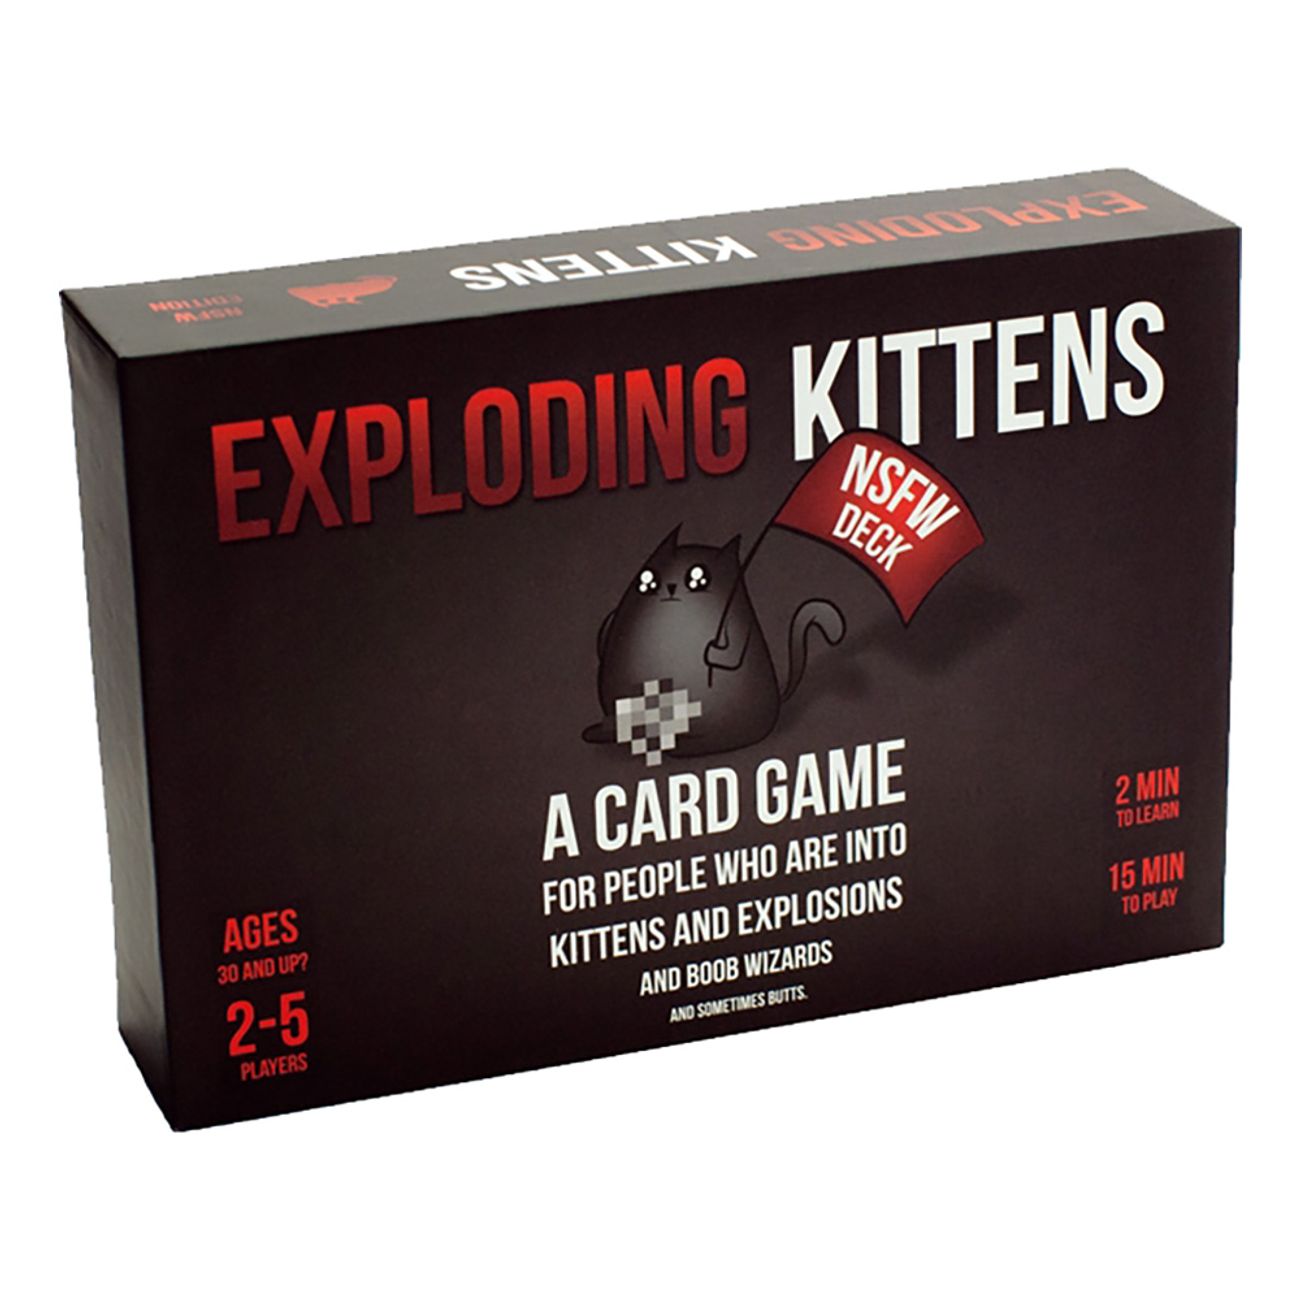 exploding-kittens-nsfw-edition-sallskapsspel-1